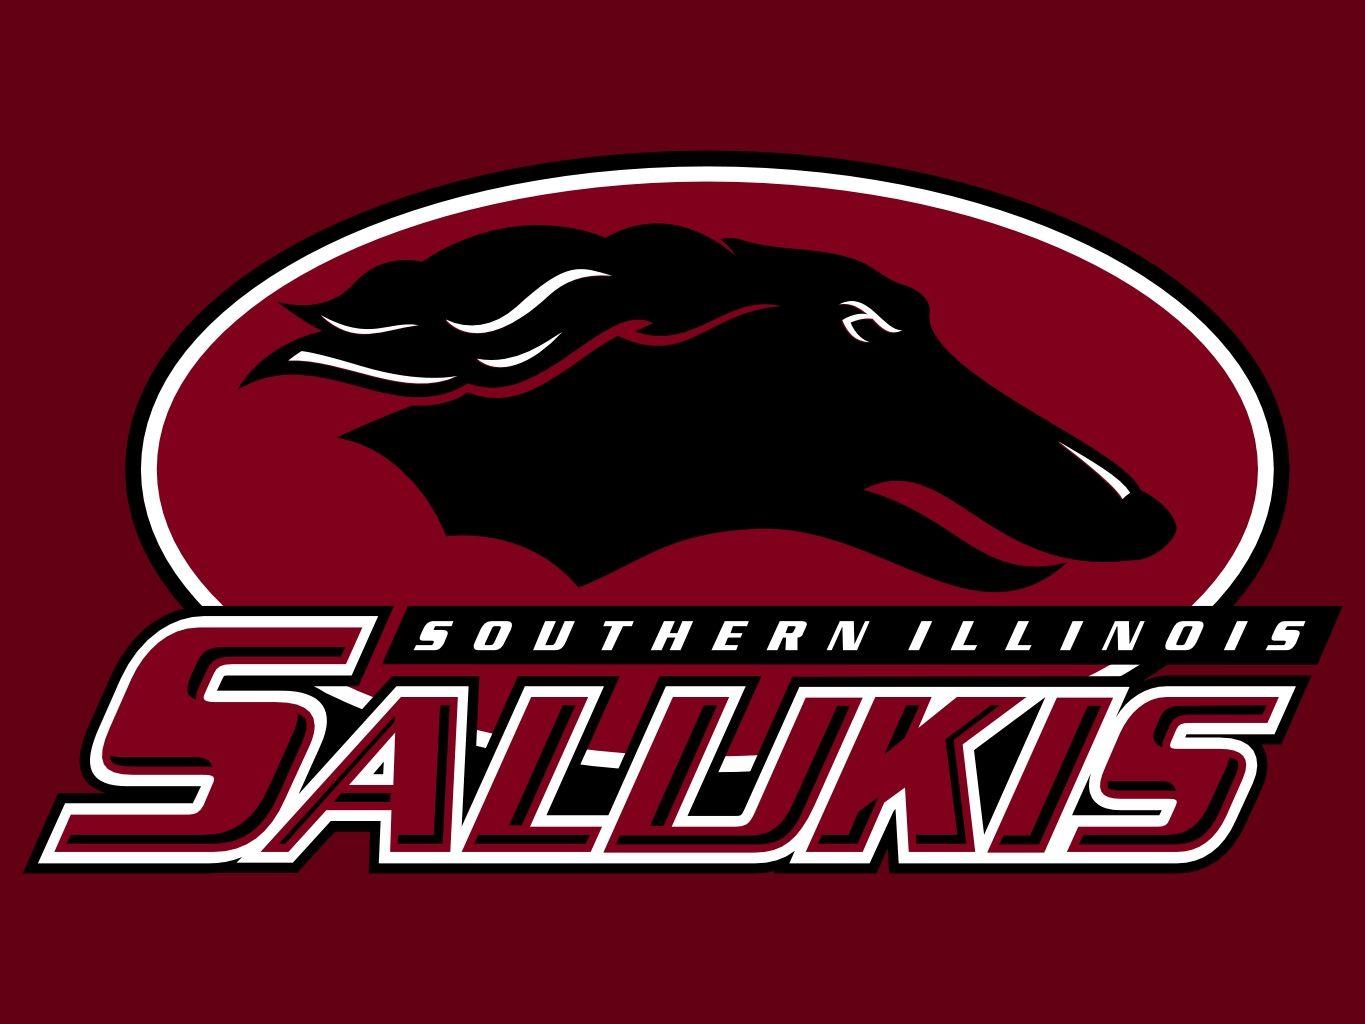 Southern Illinois Salukis Logo - Southern Illinois Salukis